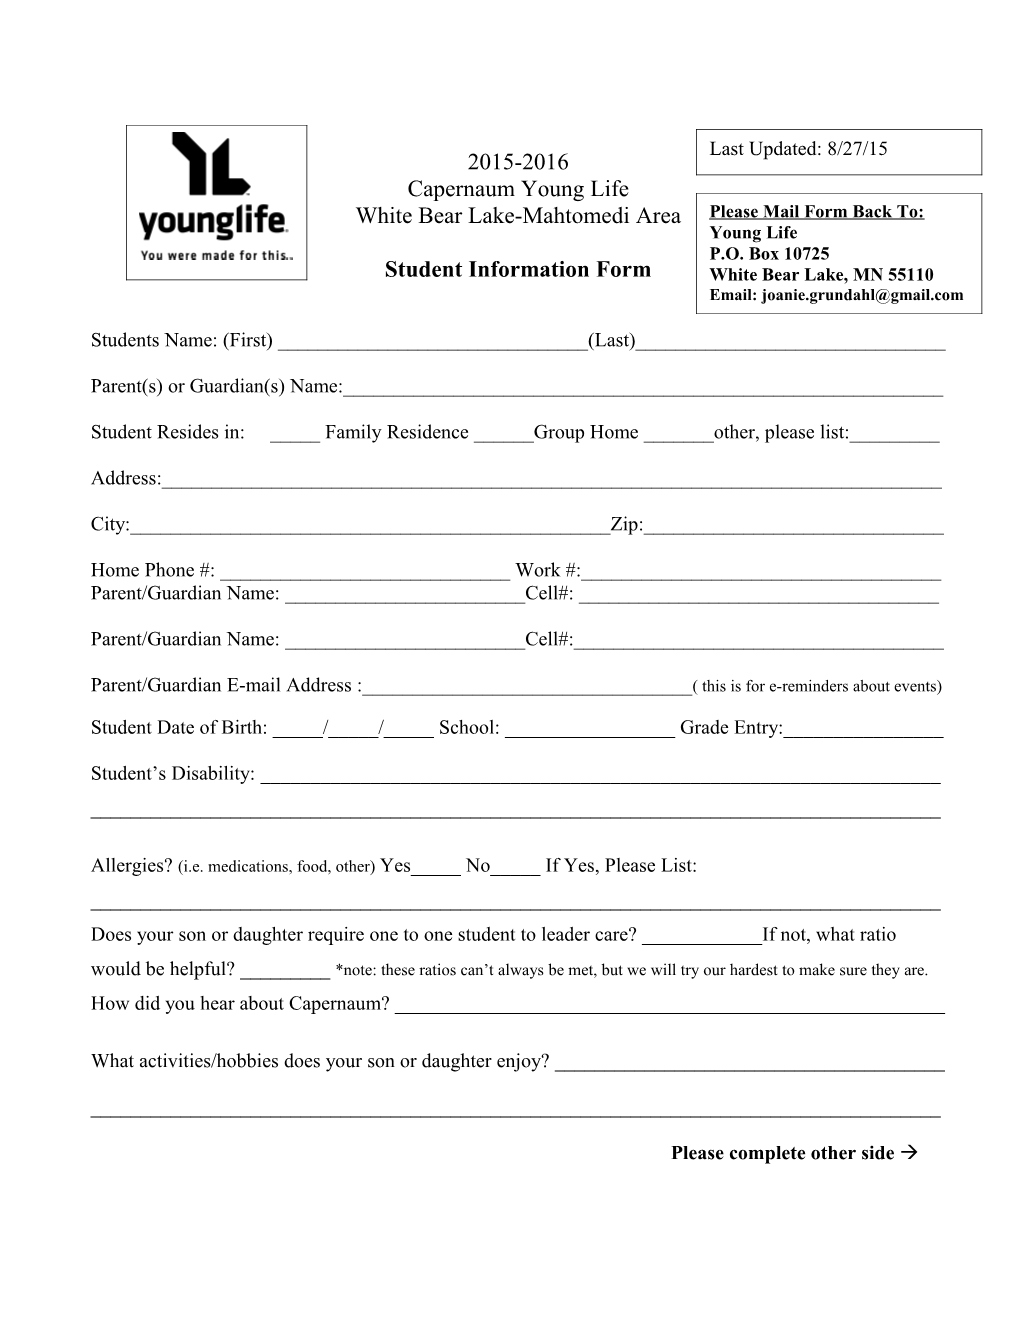 Capernaum Student Information Form 2015-16